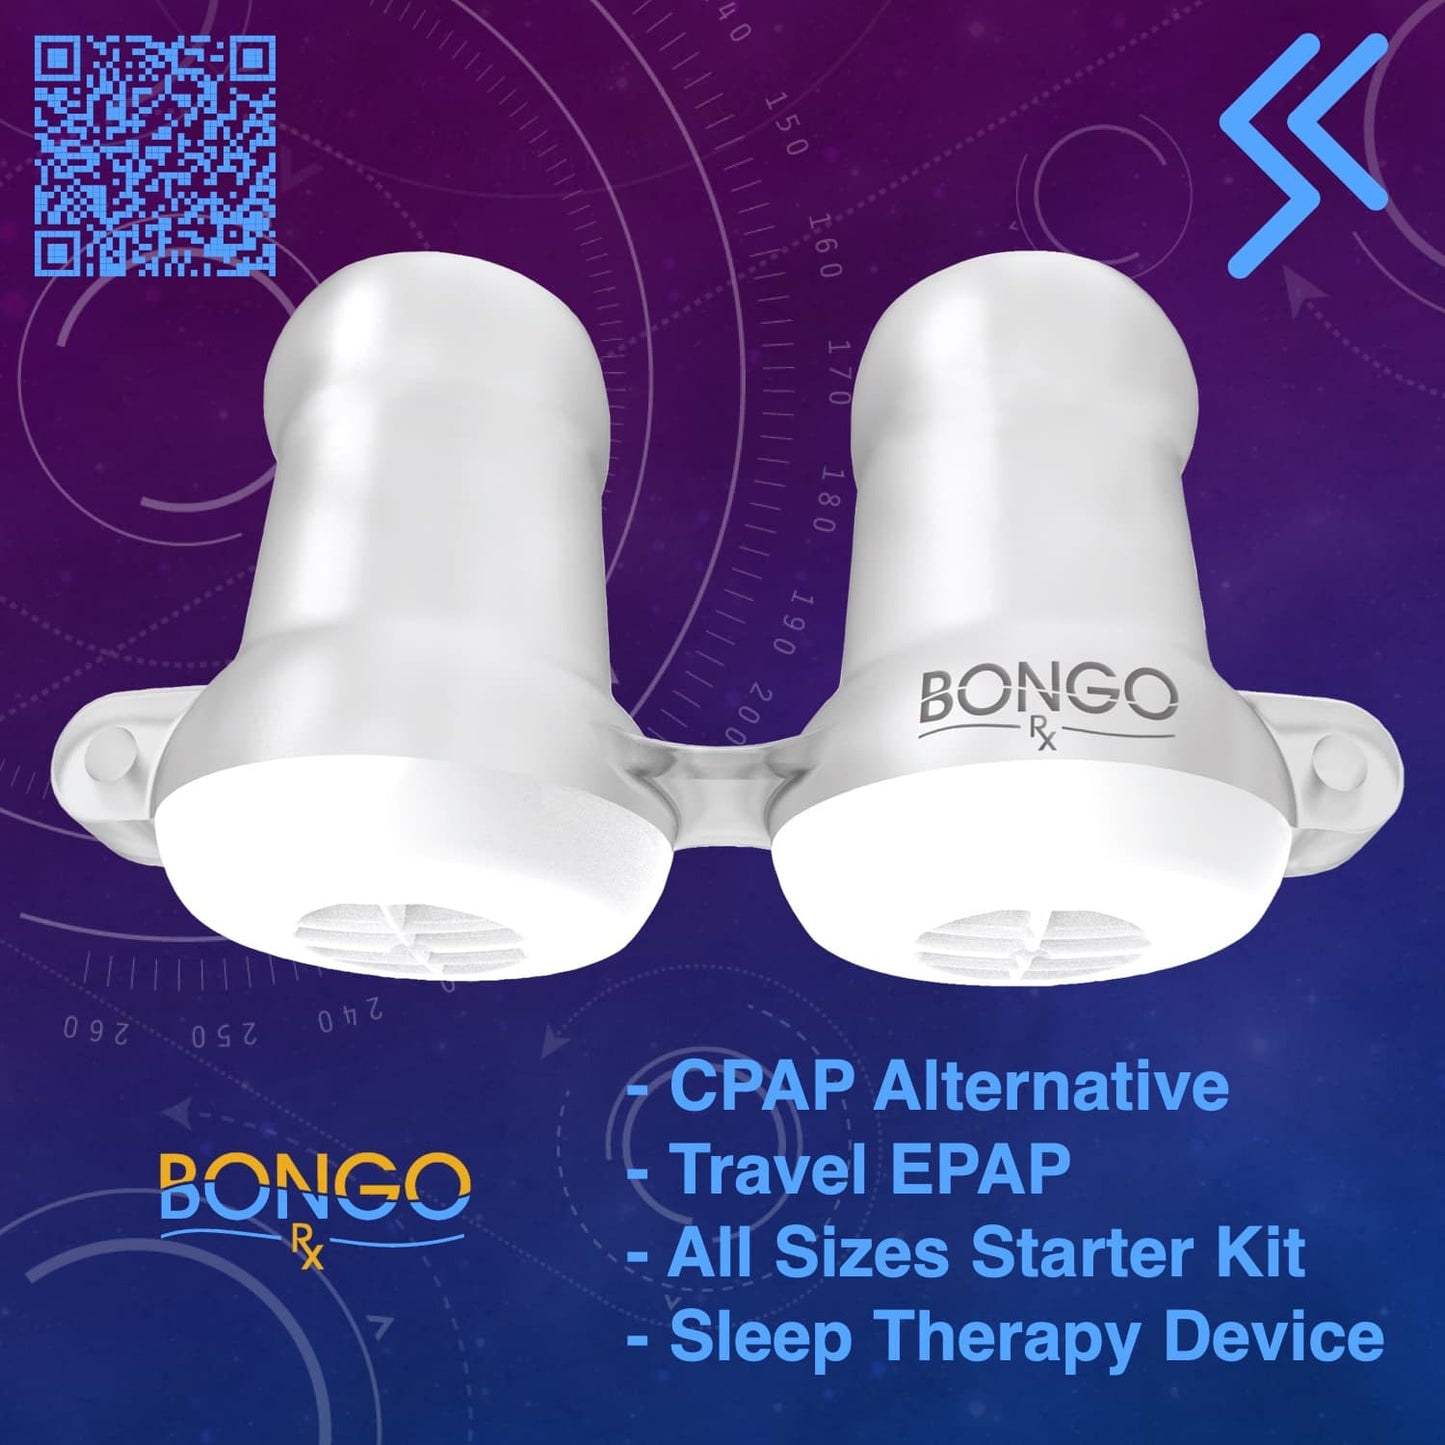 Bongo Rx - CPAP Alternative, Travel CPAP - All Sizes Starter Kit